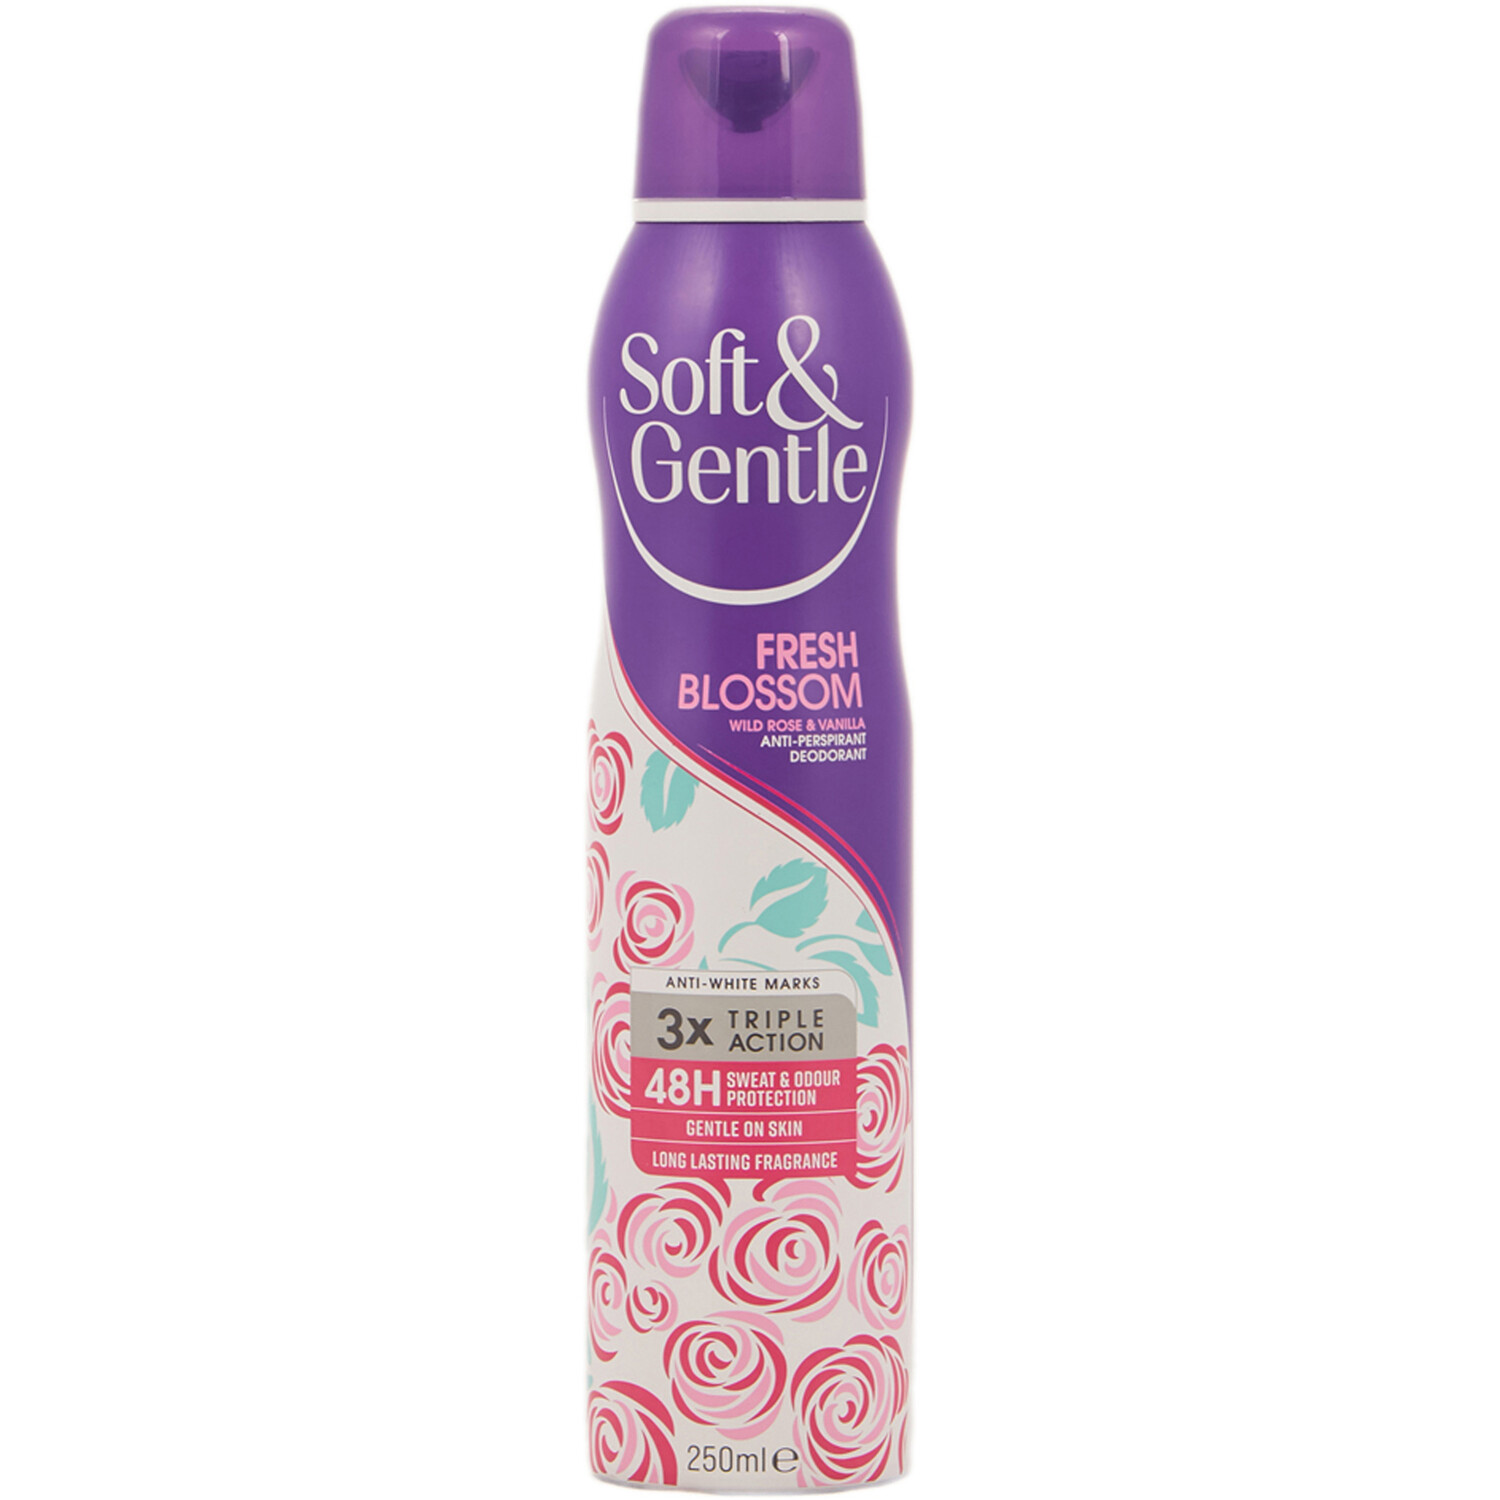 Soft & Gentle Fresh Blossom Anti-Perspirant Deodorant Spray - Purple Image 1